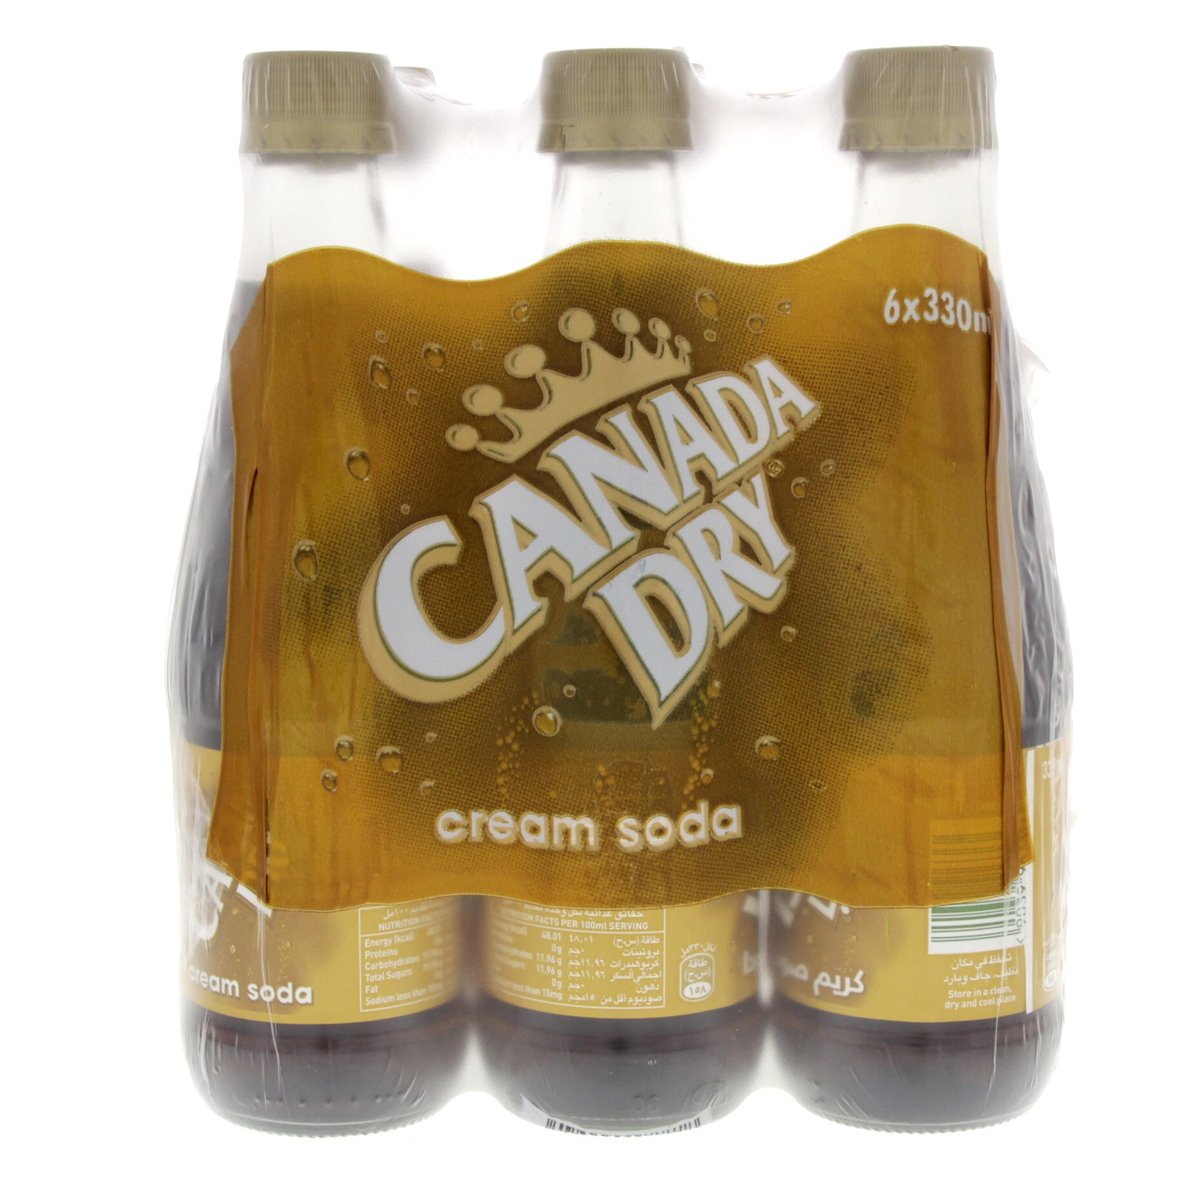 Canada Dry Cream Soda 6 x 330 ml